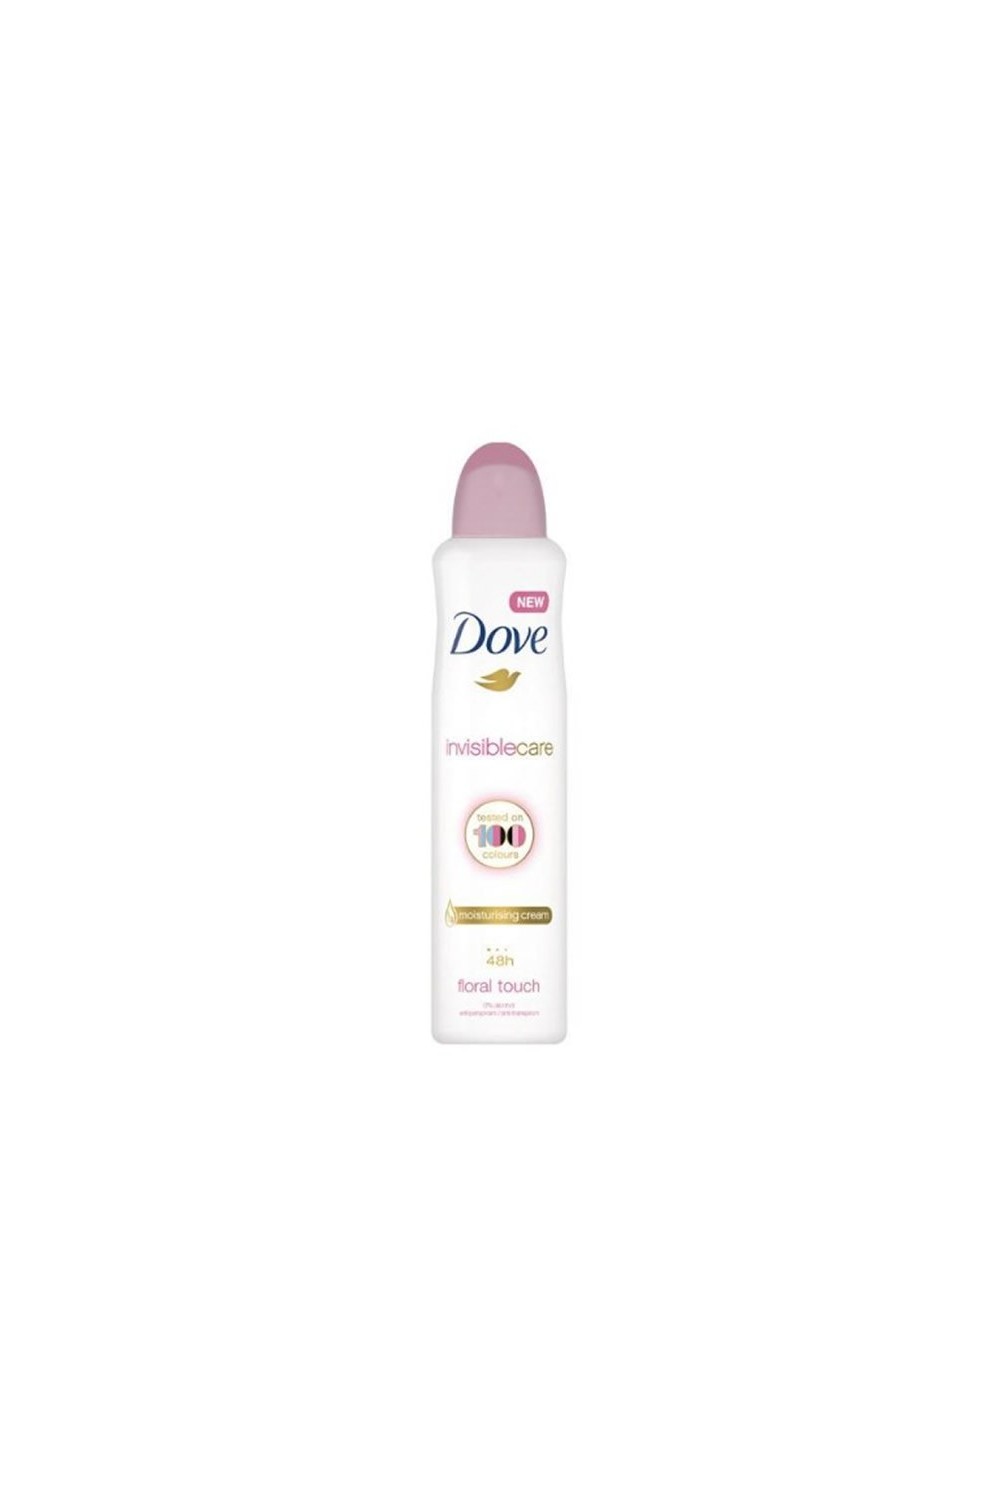 Dove Invisible Care Floral Touch Deodorant Spray 250ml